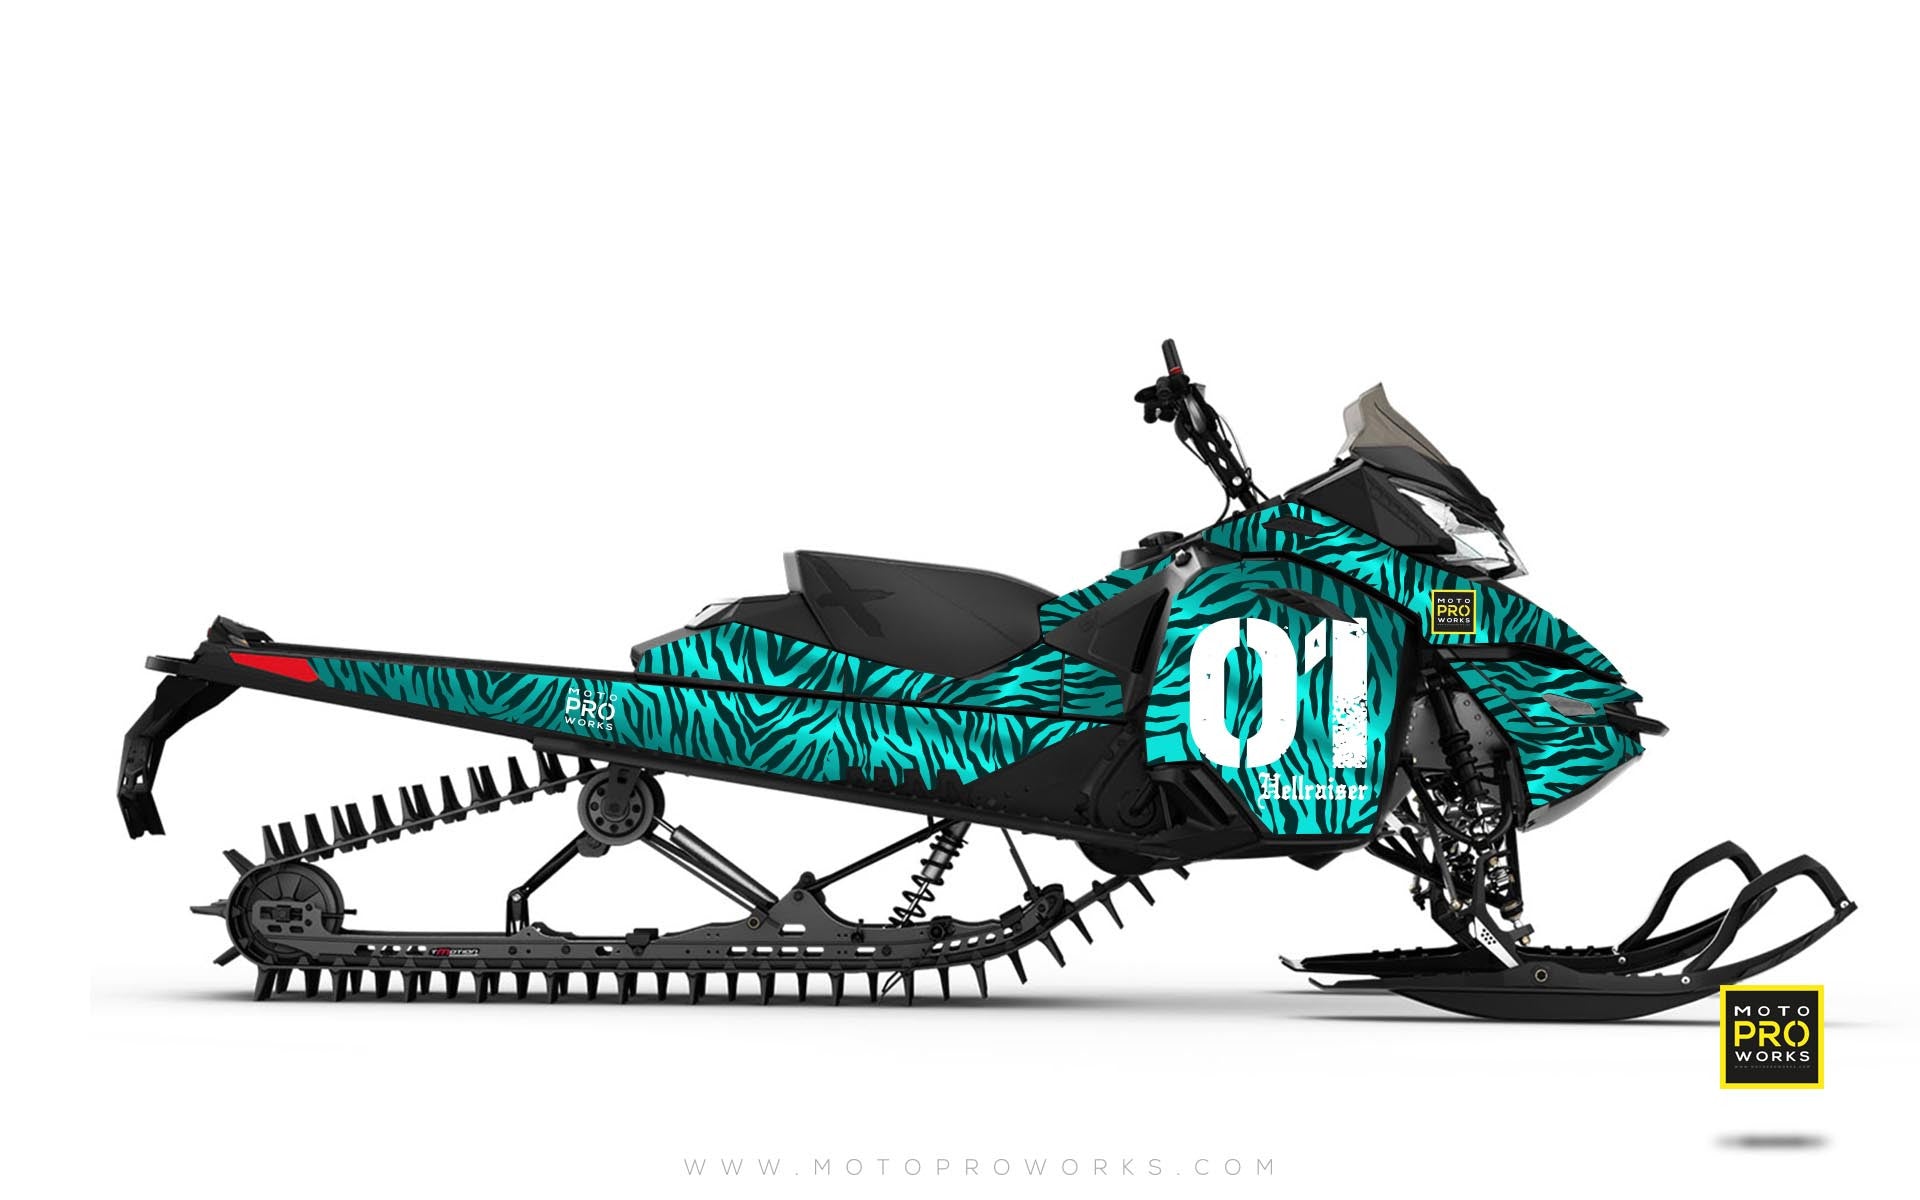 Ski-Doo Graphics - "Stripey" (mintu) - MotoProWorks | Decals and Bike Graphic kit